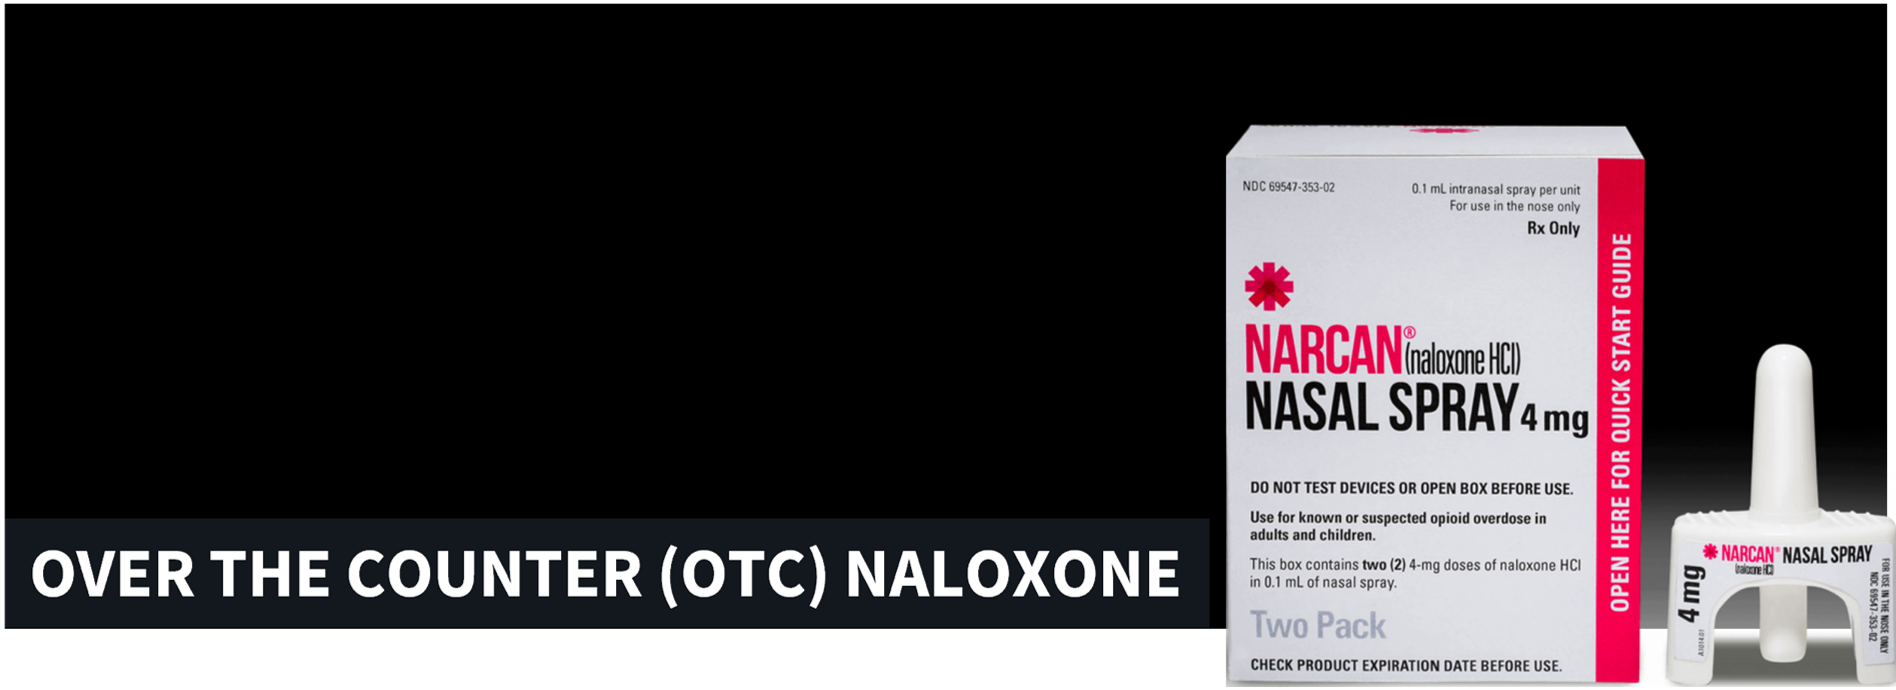 Over the Counter (OTC) Naloxone